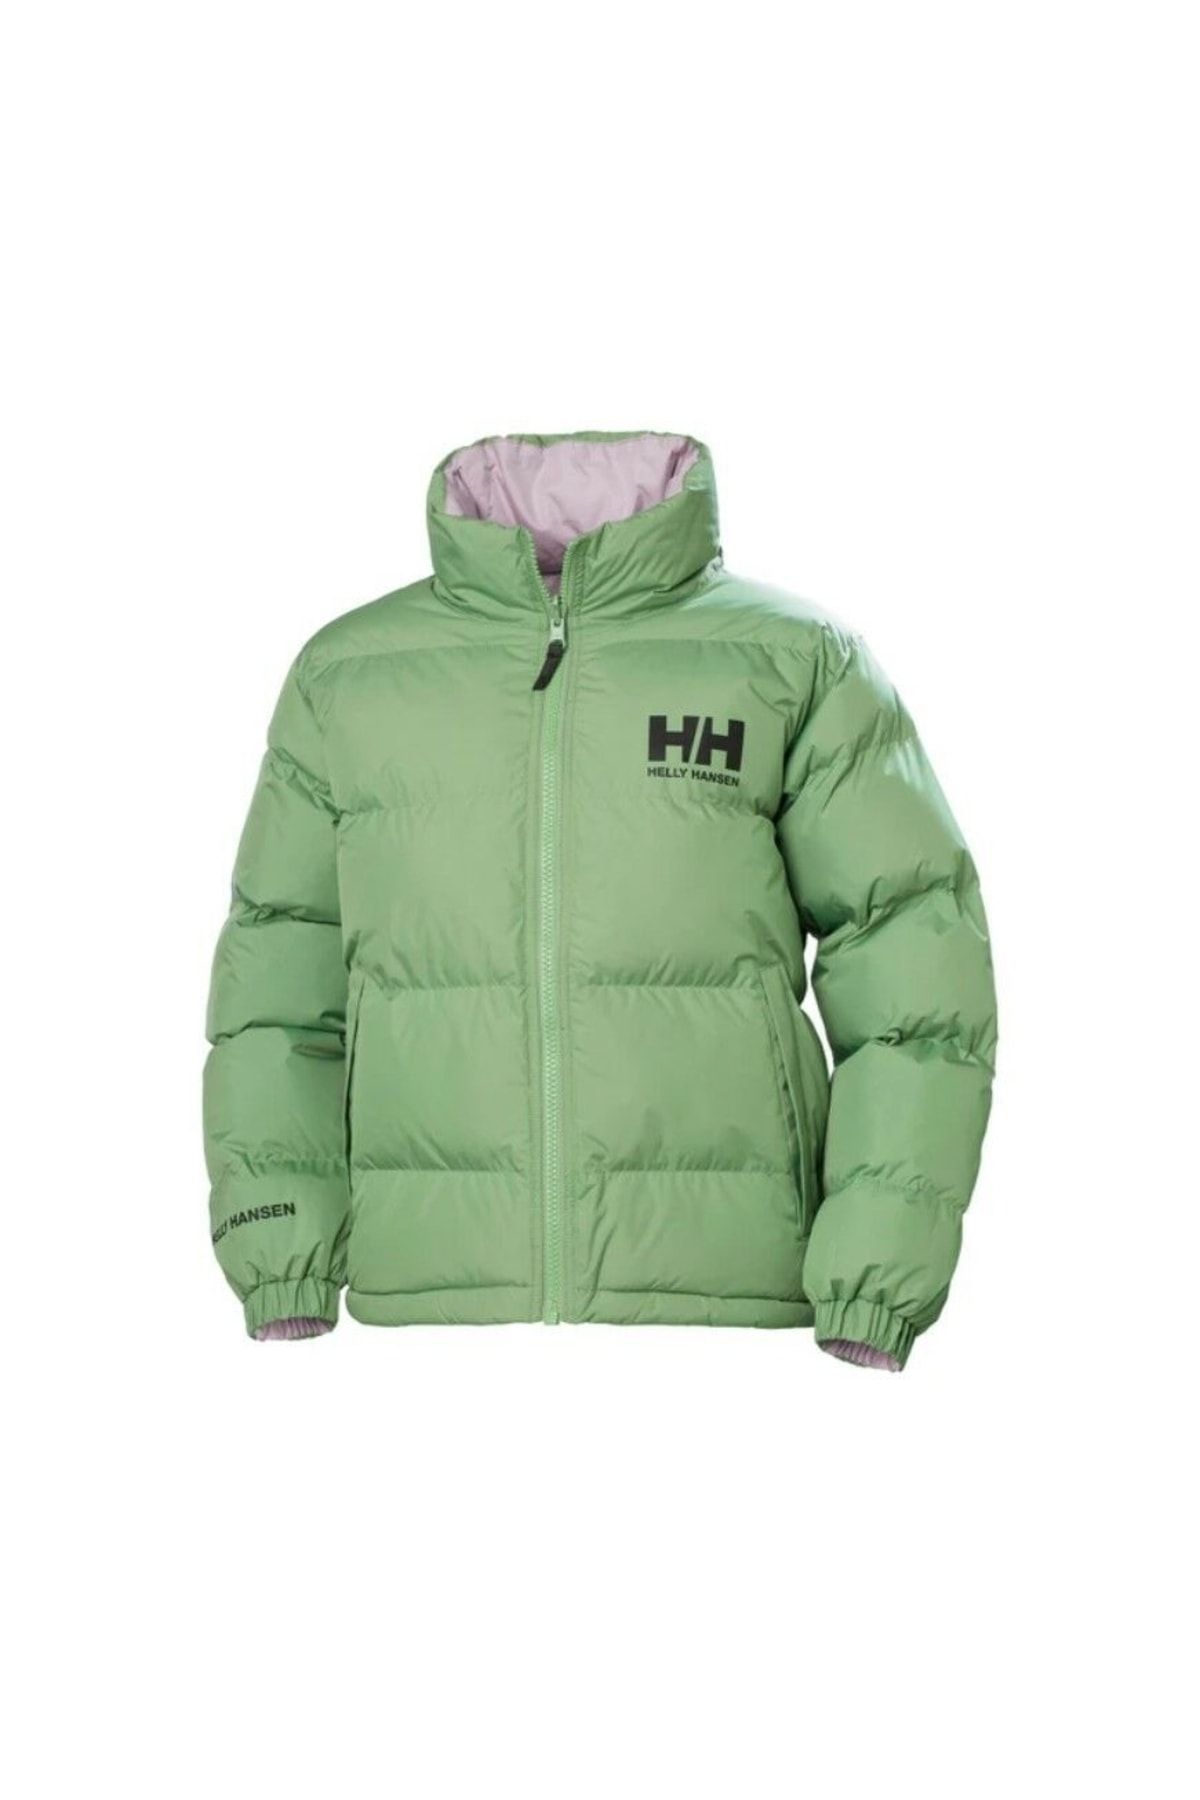 Helly Hansen Hh Urban Reversible Kadın Outdoor Ceket